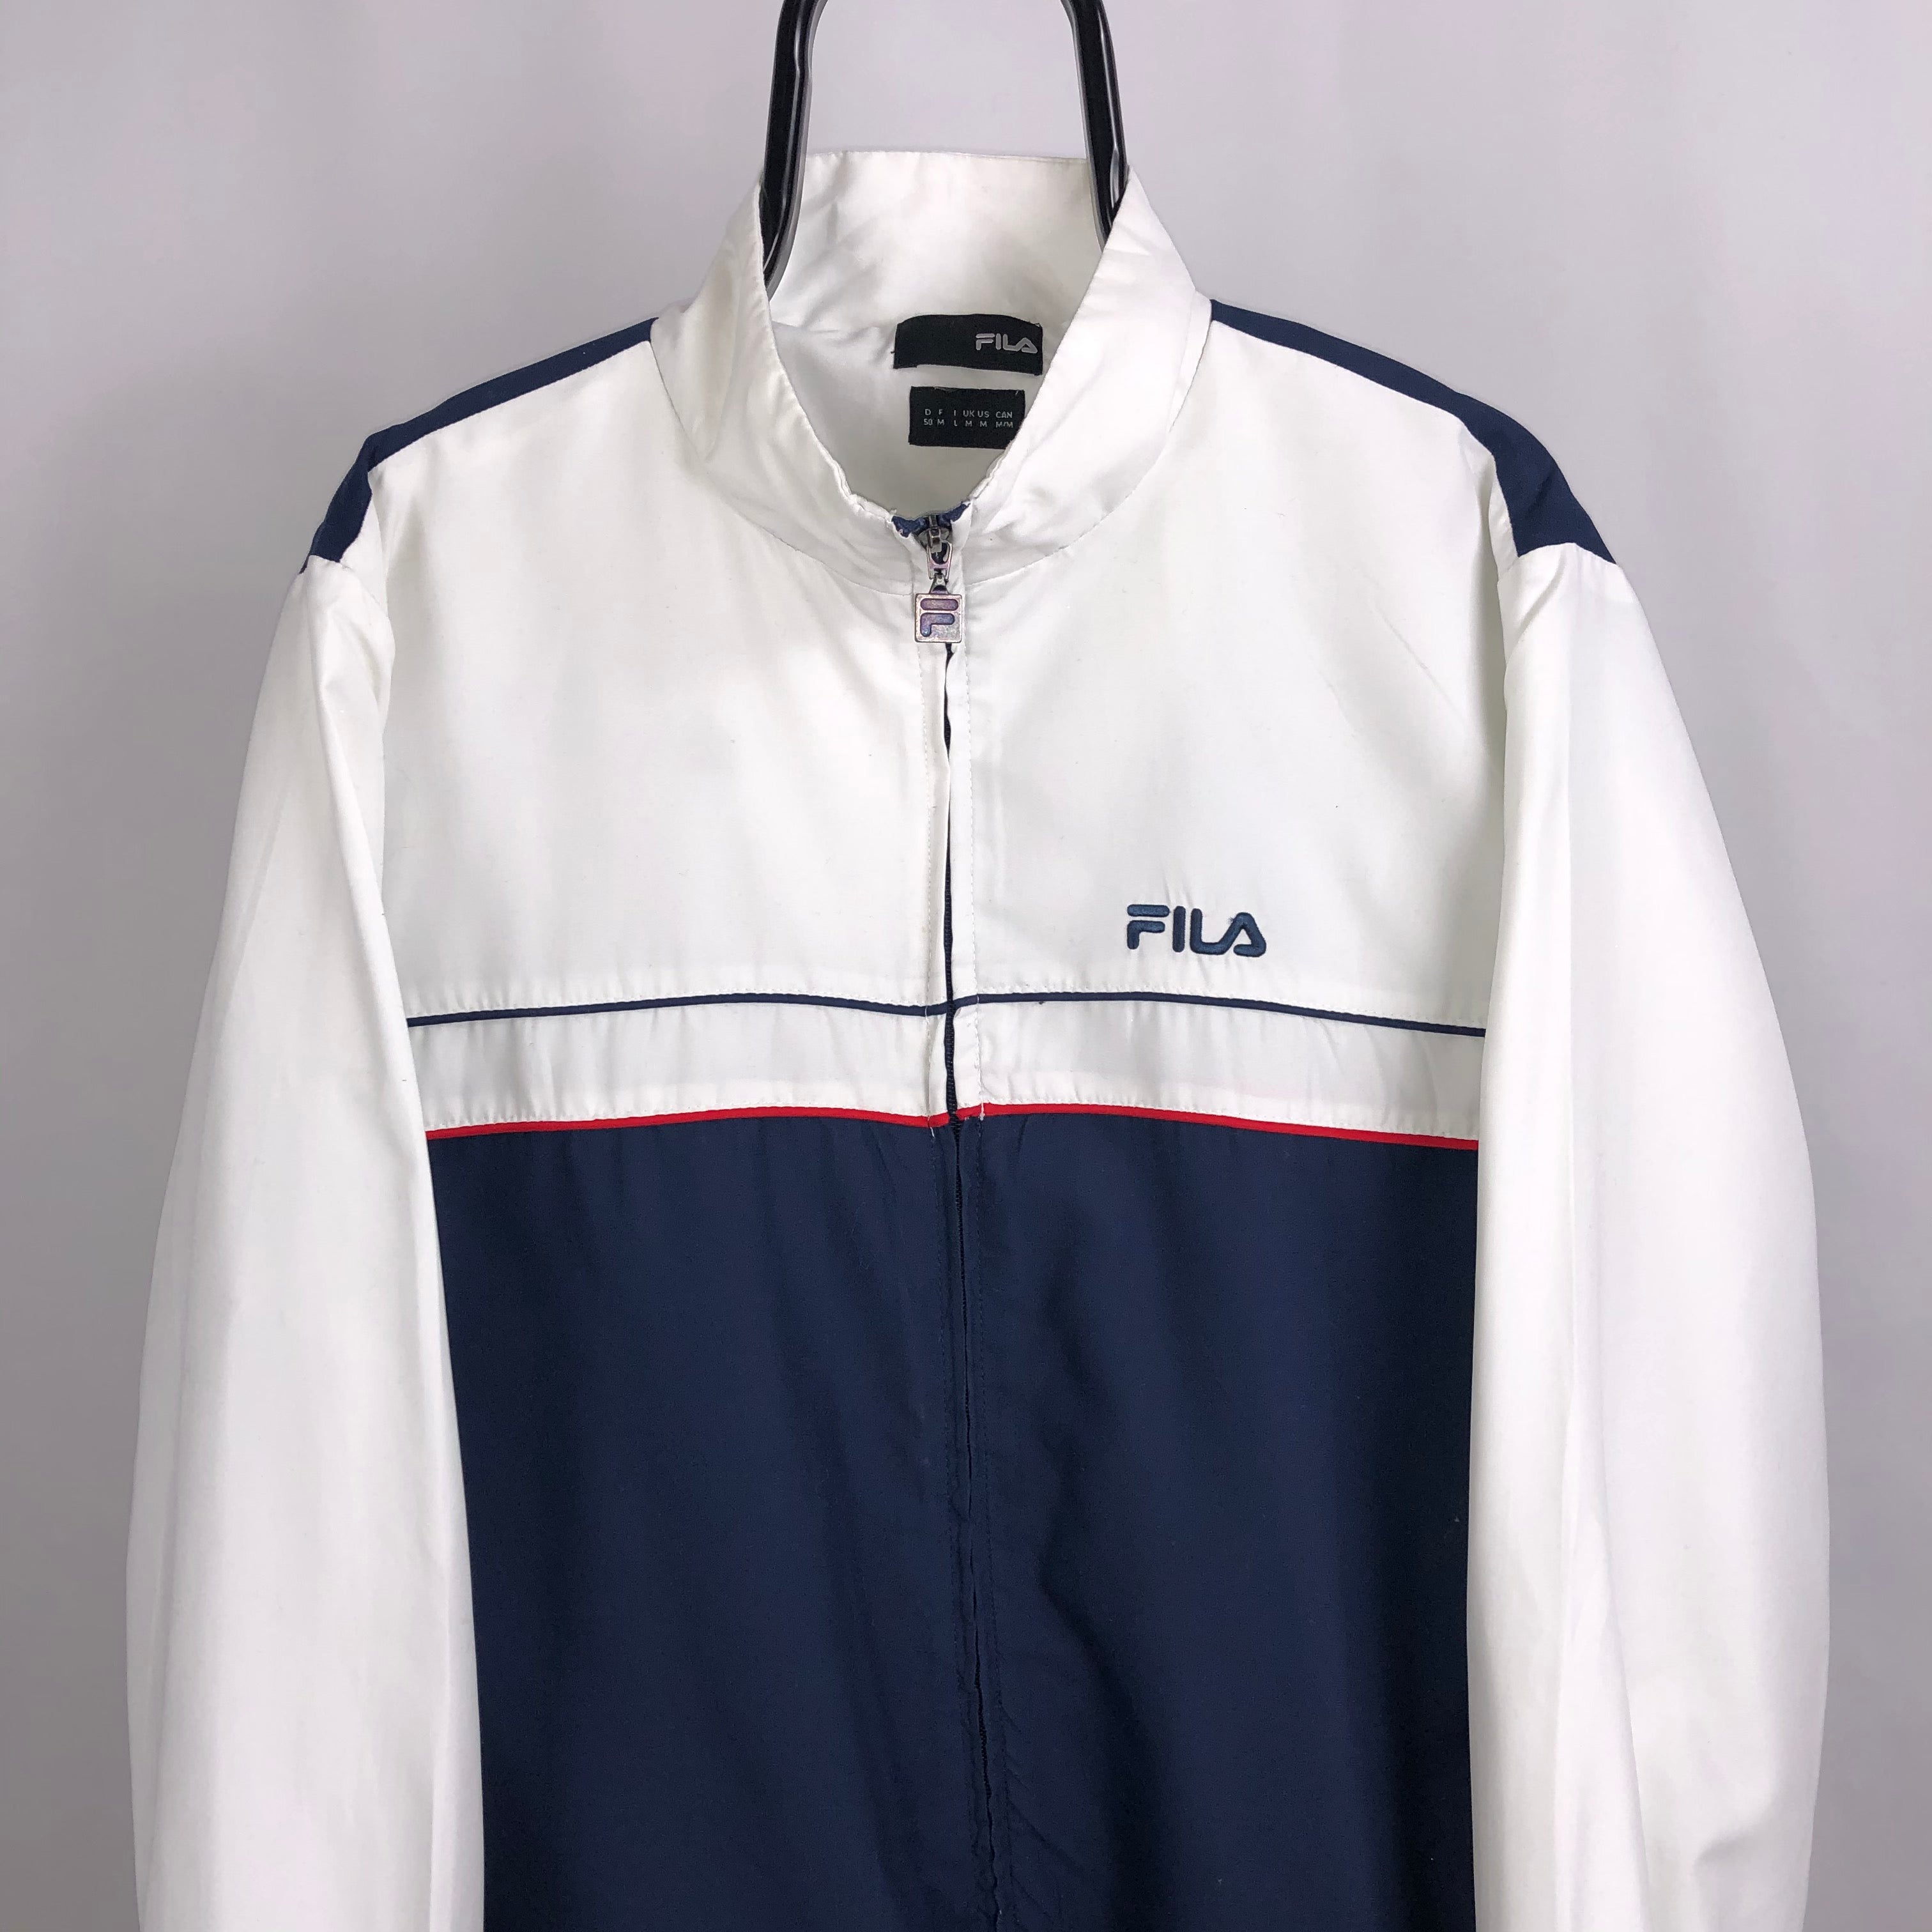 Vintage Fila Track Jacket in White/Navy - Men's Medium/Women's Large ...